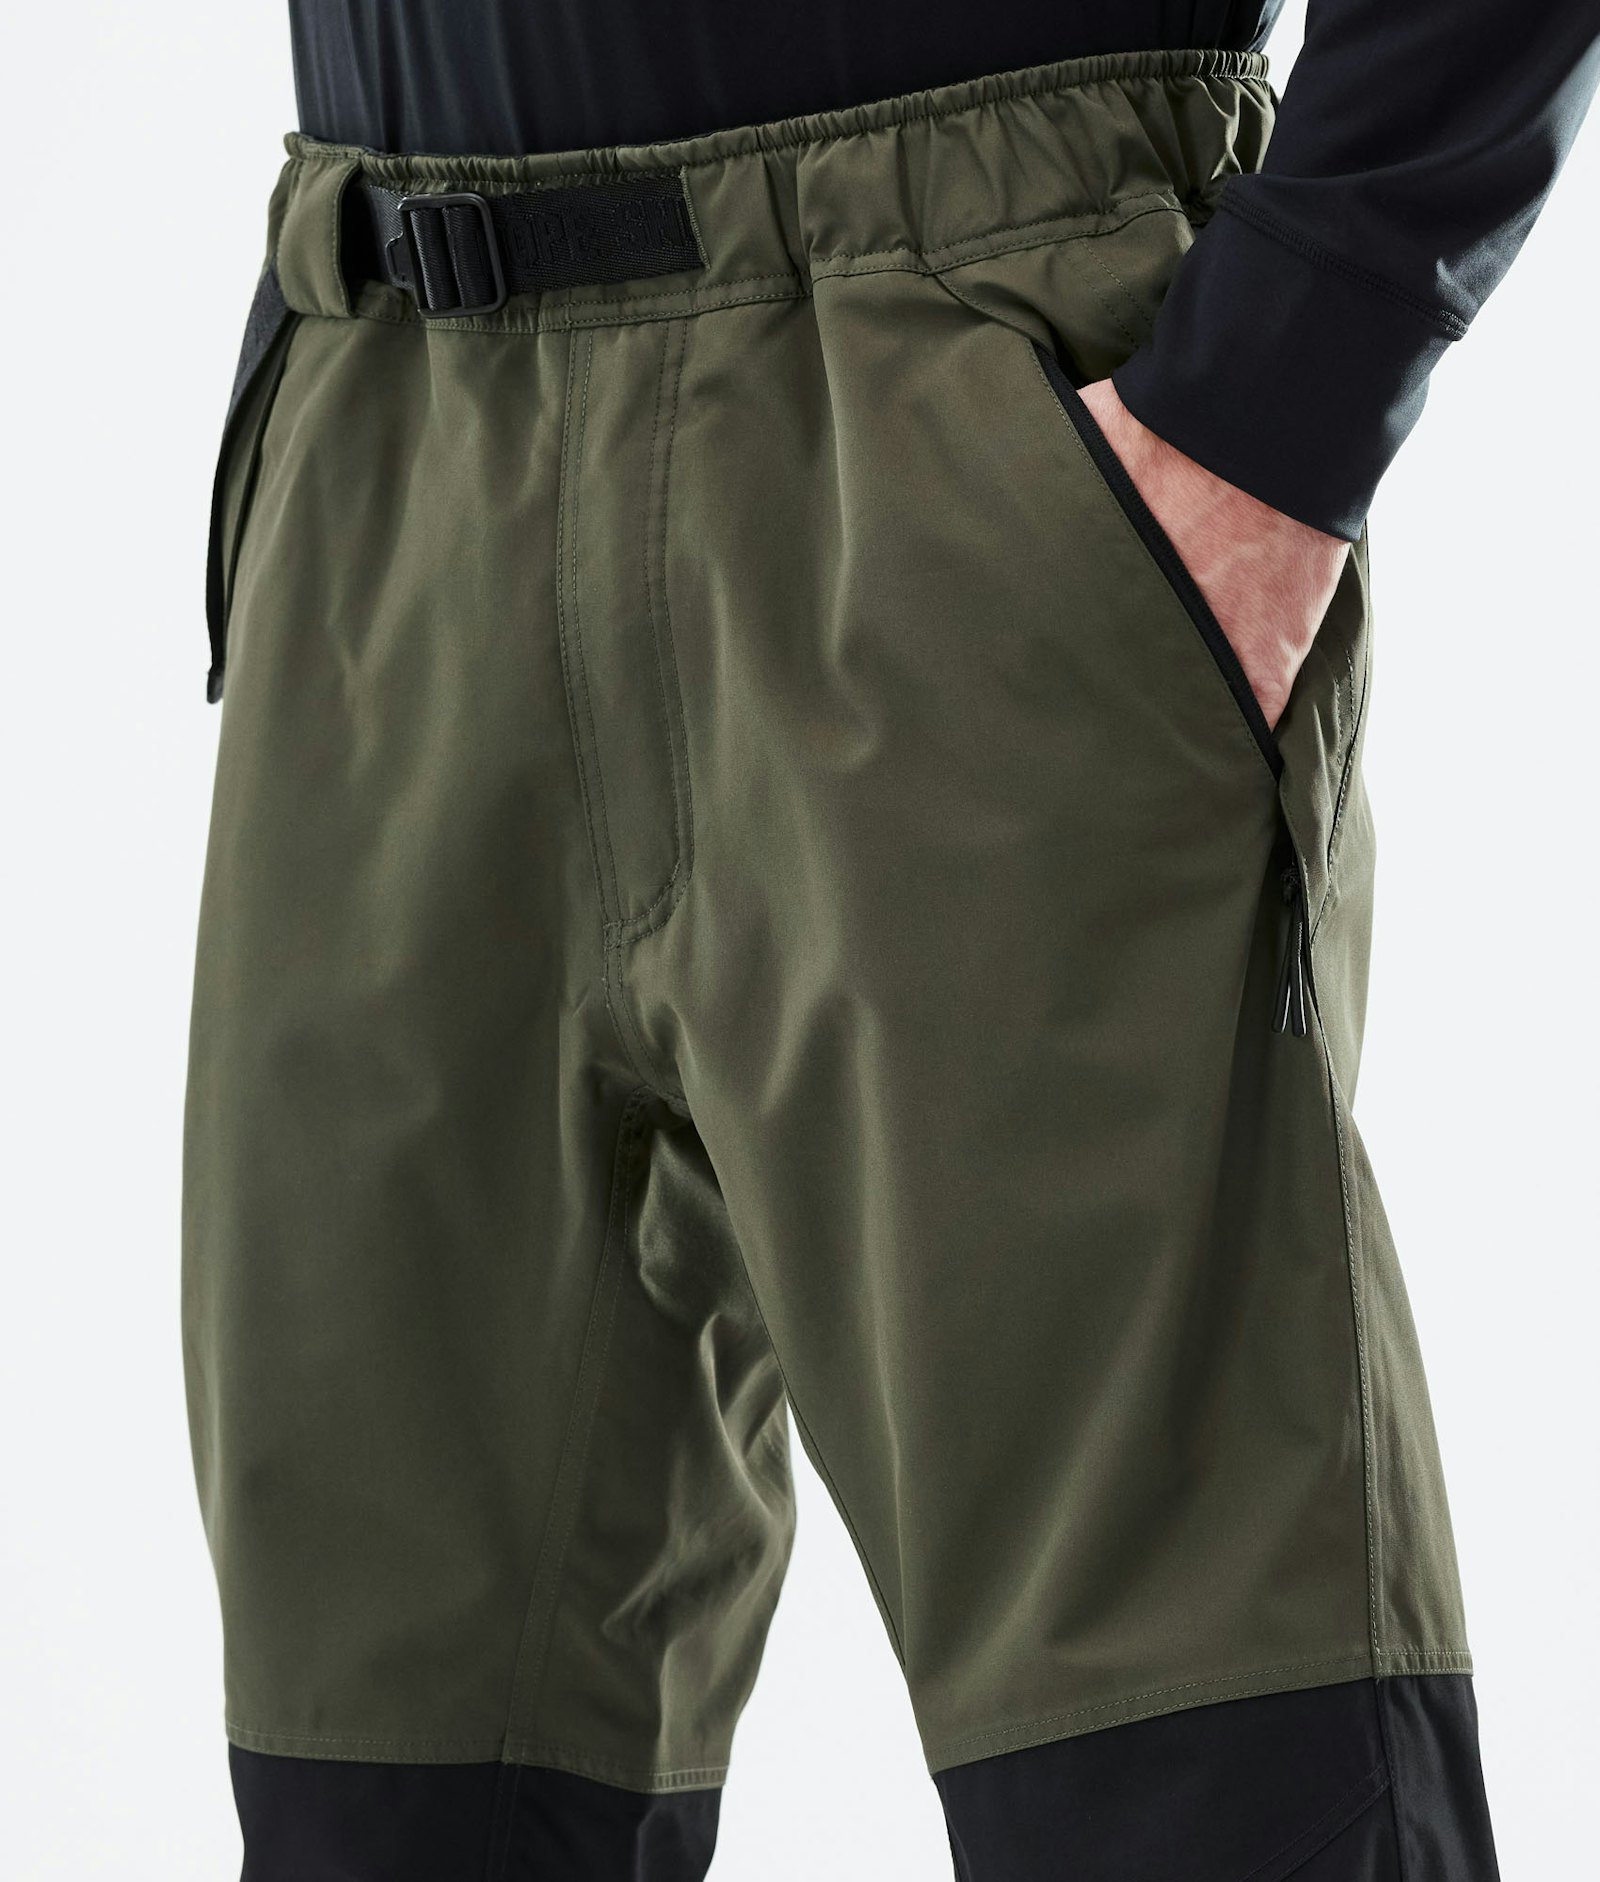 Blizzard LE Pantalon de Ski Homme Limited Edition Multicolor Olive Green